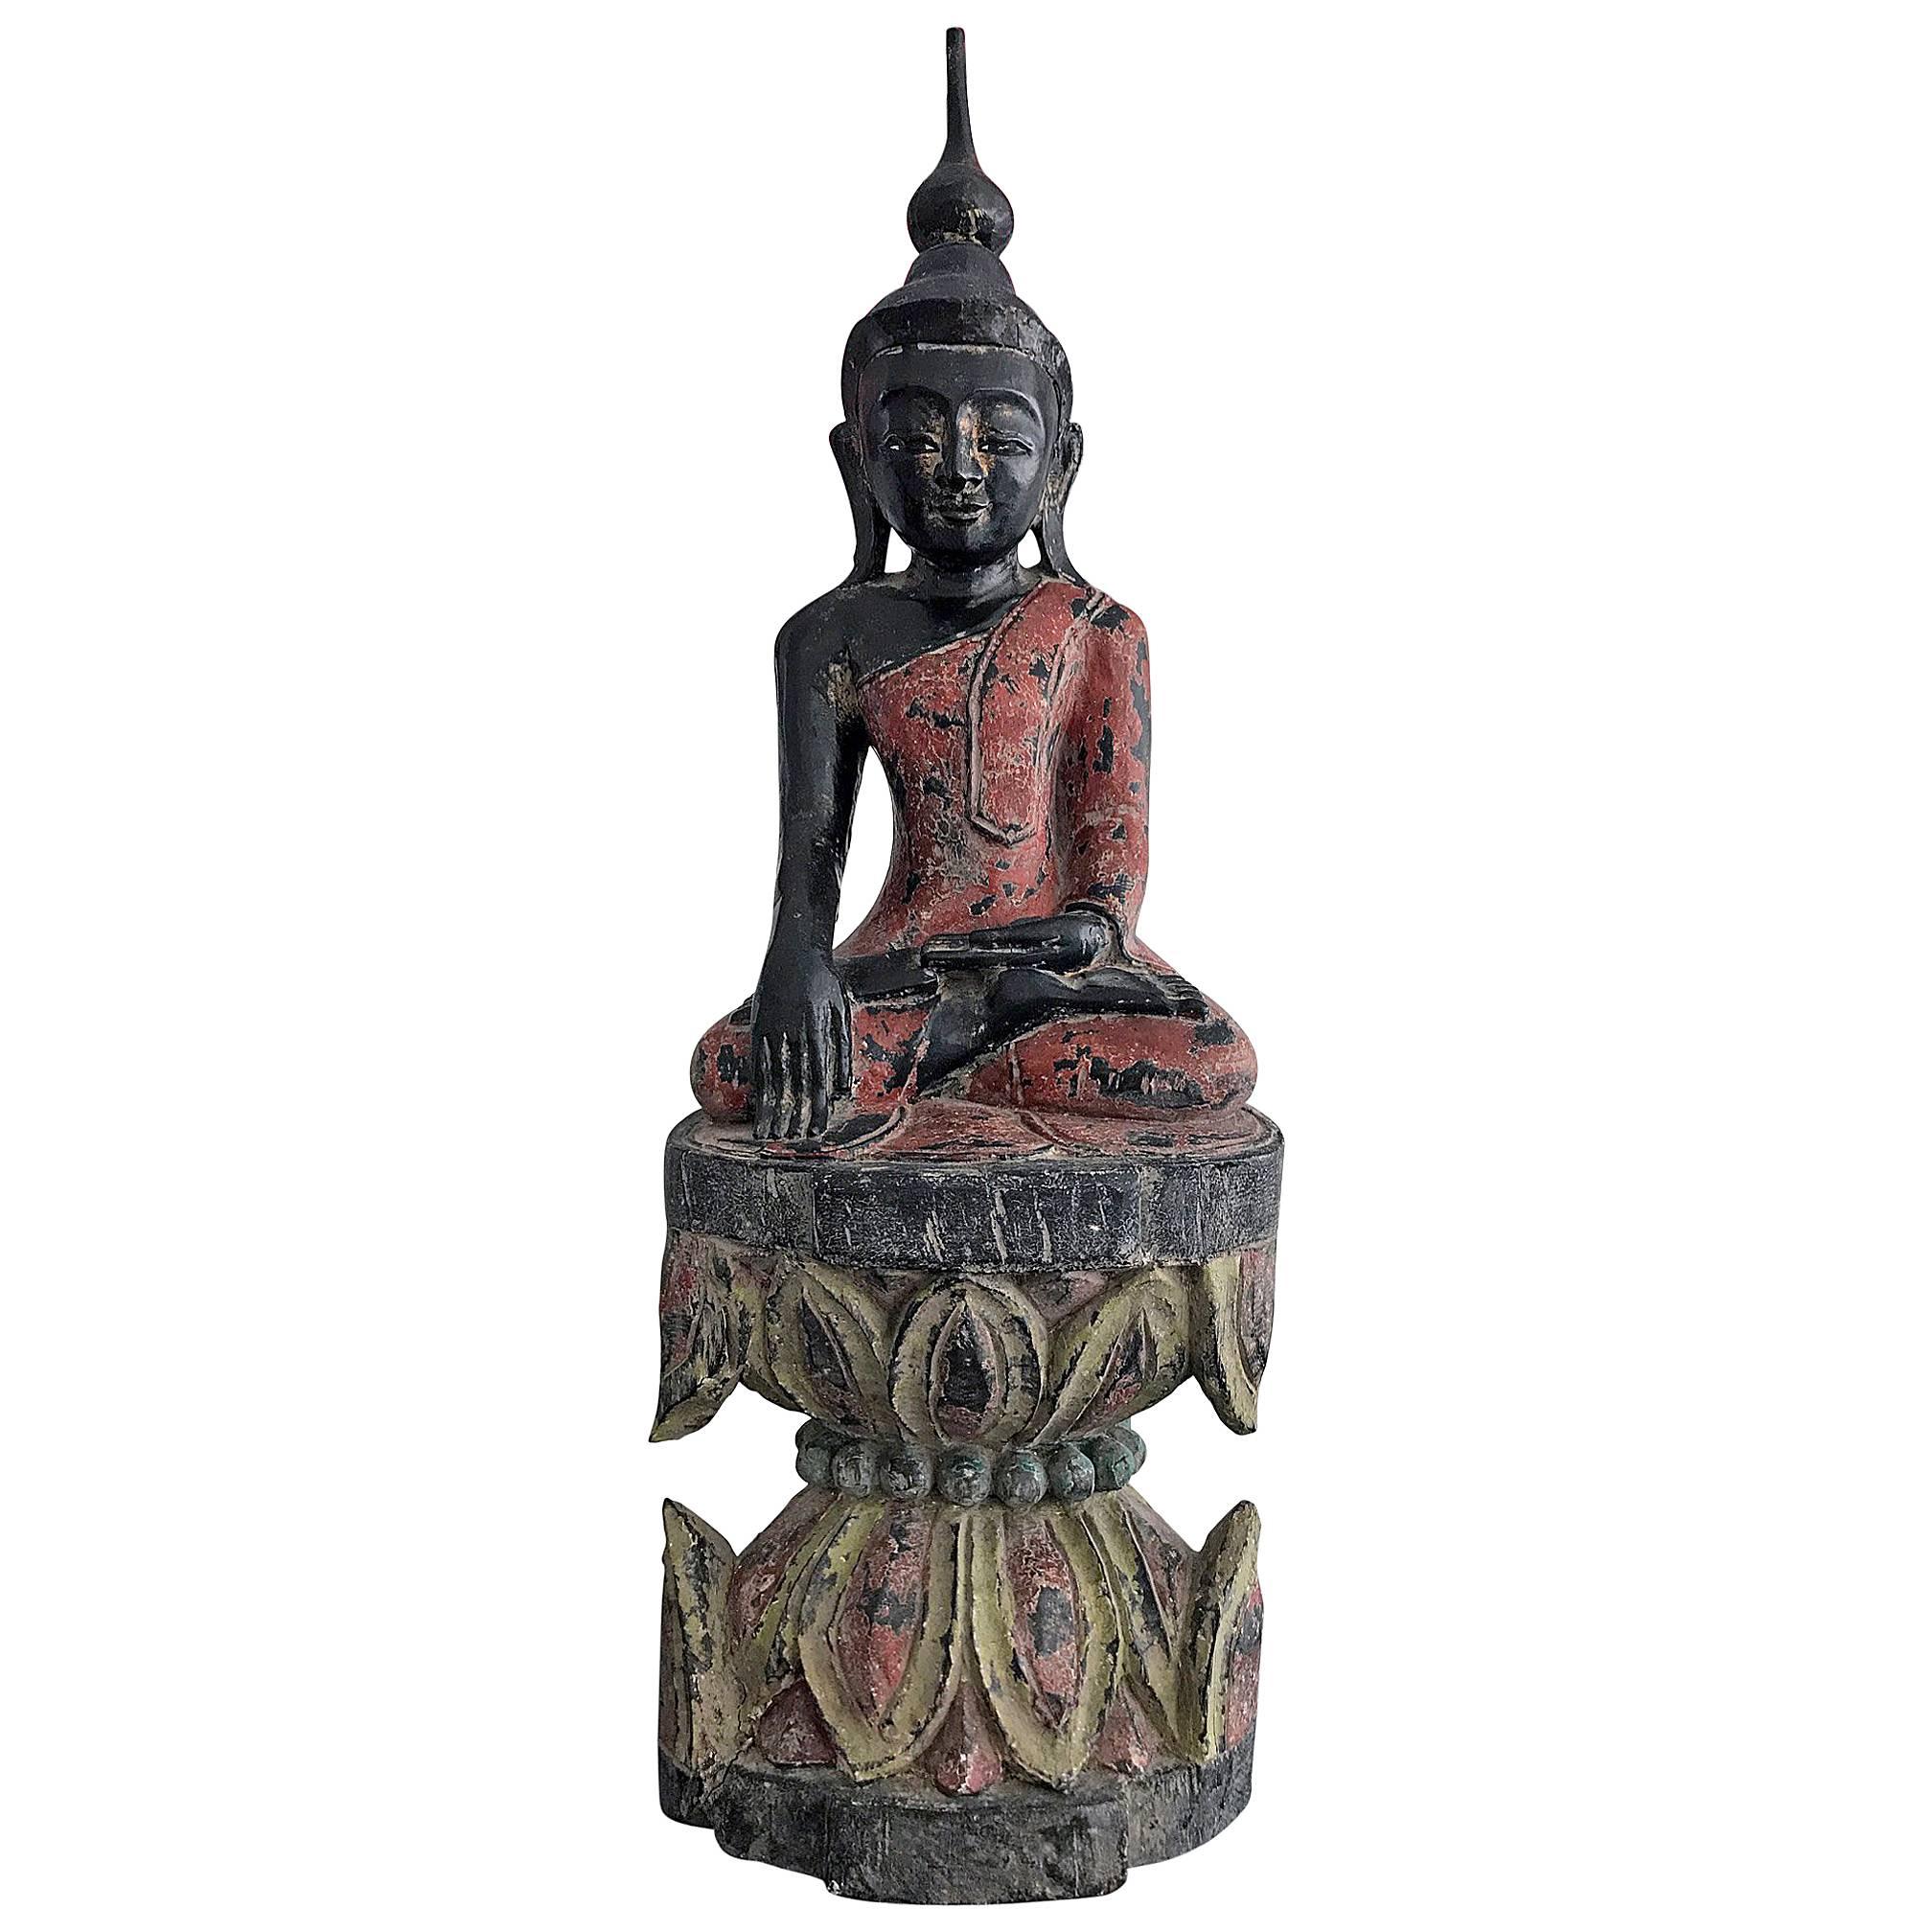 Antique Polychrome Buddha on Lotus Throne